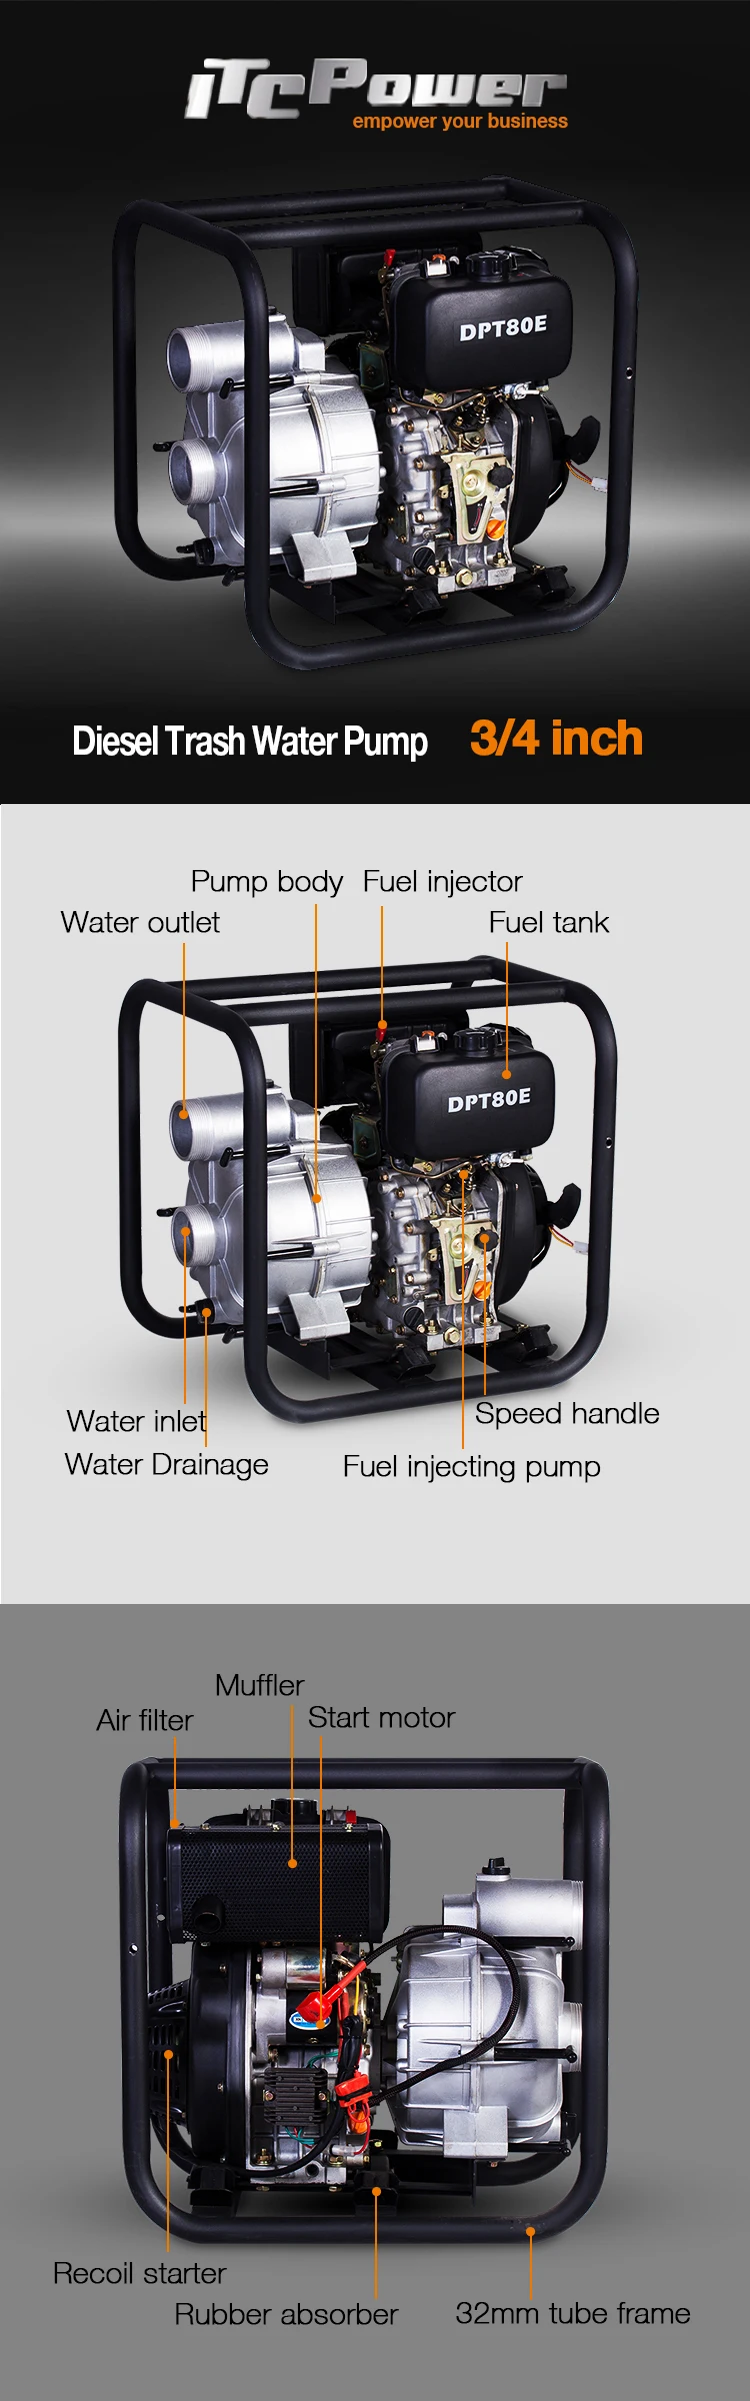 Refund agreed Factory direct sale 3 inch diesel trash water pump